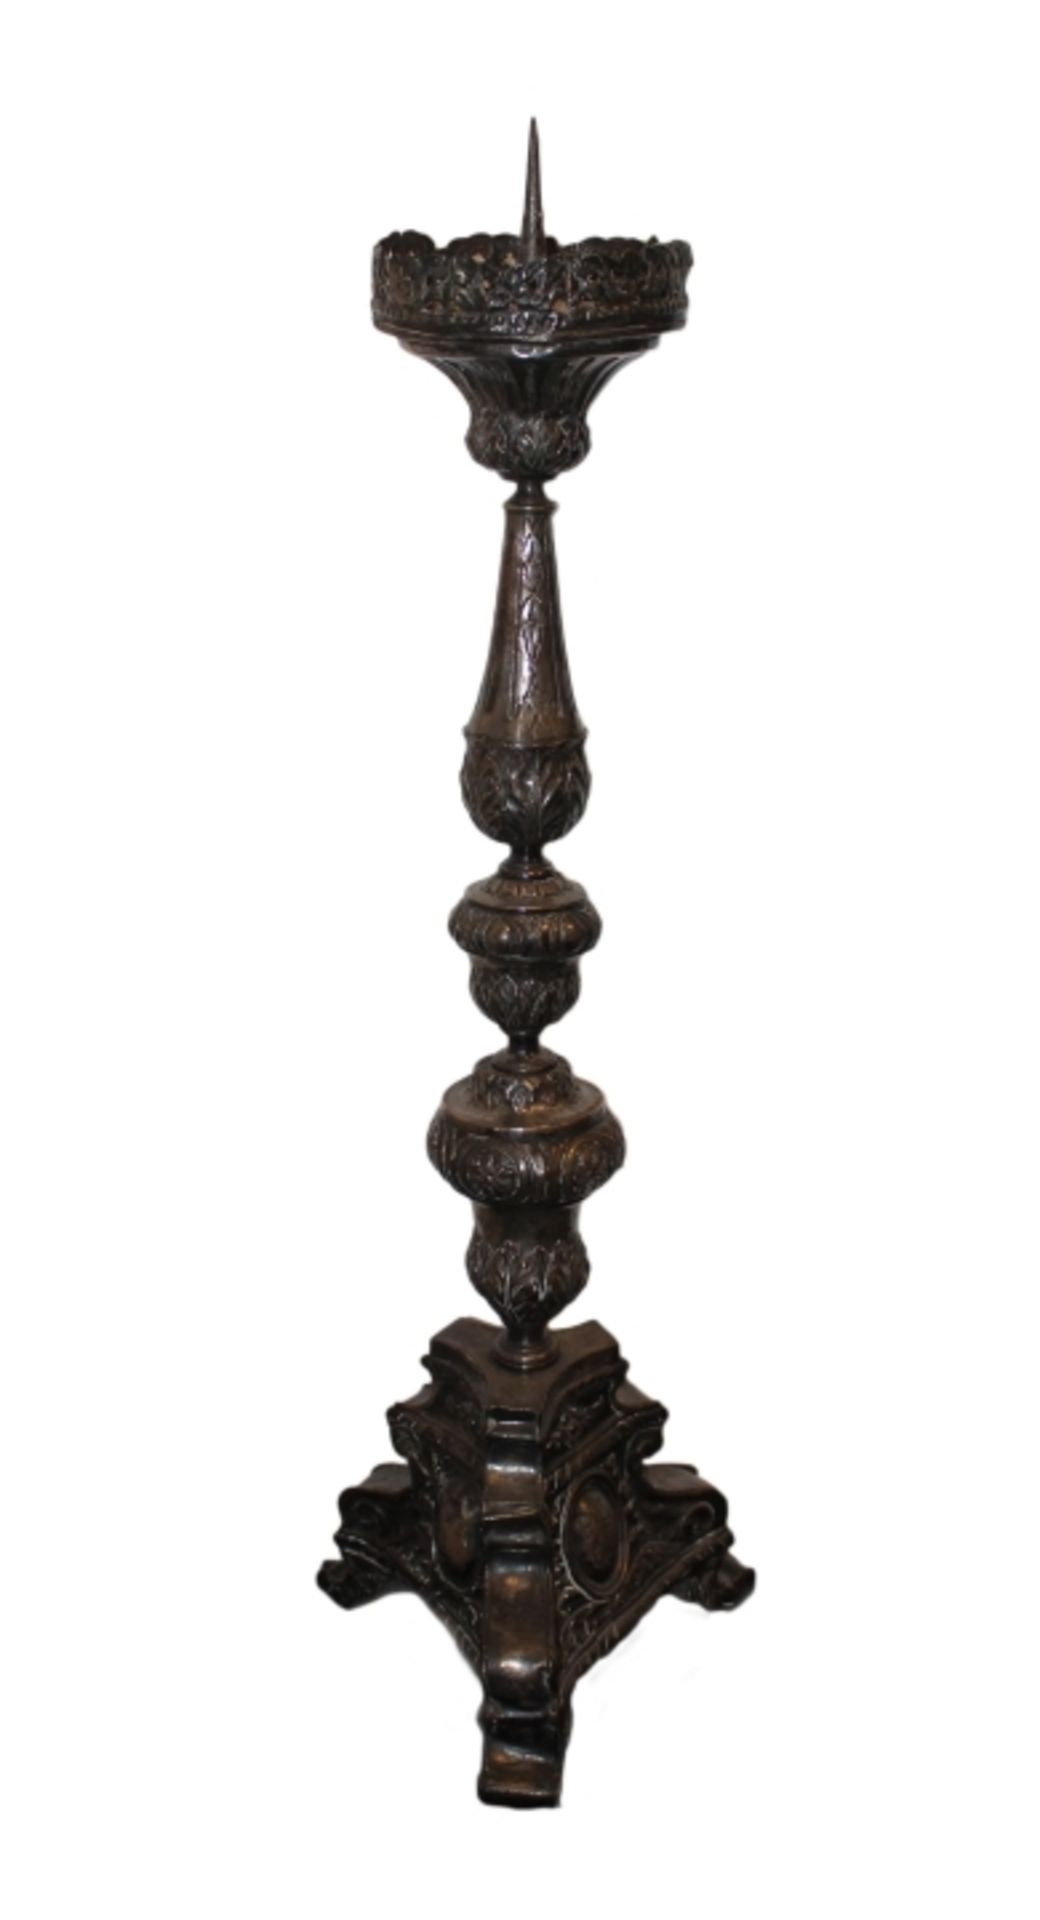 Großer Kerzenleuchter - 18. Jahrhundert Kupfer versilbert, reich verziert mit Blattwerk,